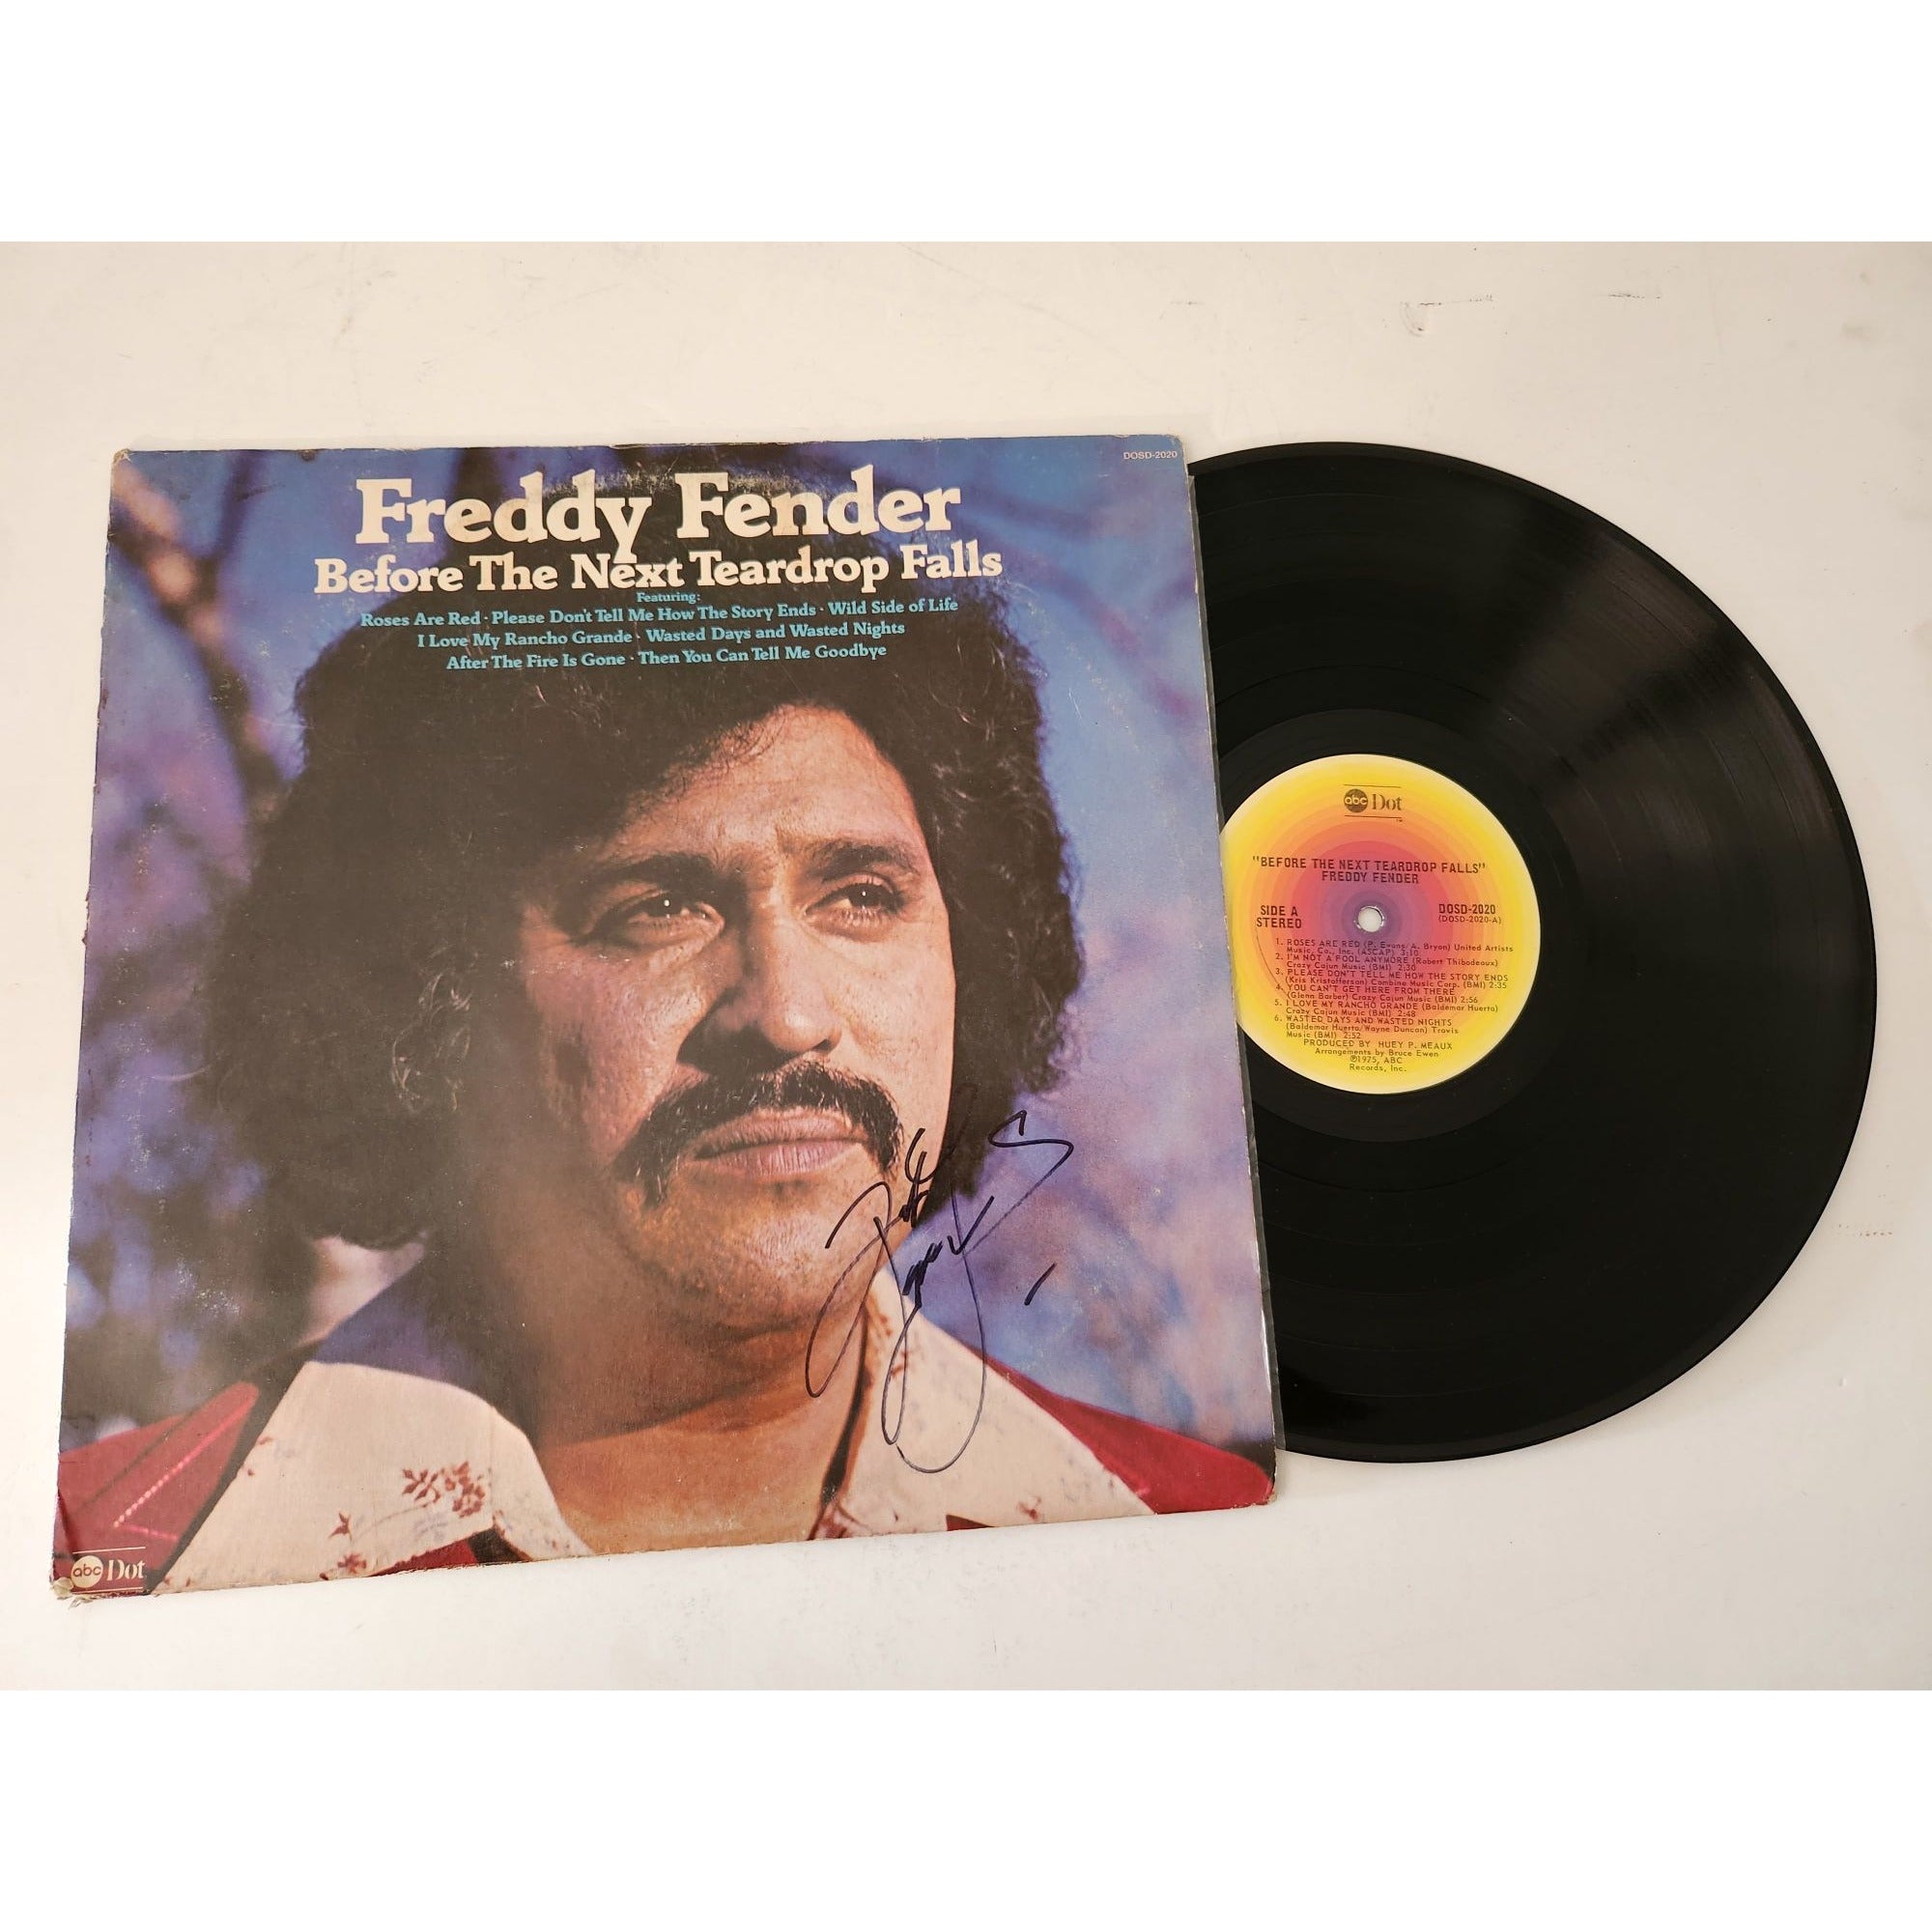 Freddy Fender Before The Next Teardrop Falls LP signed